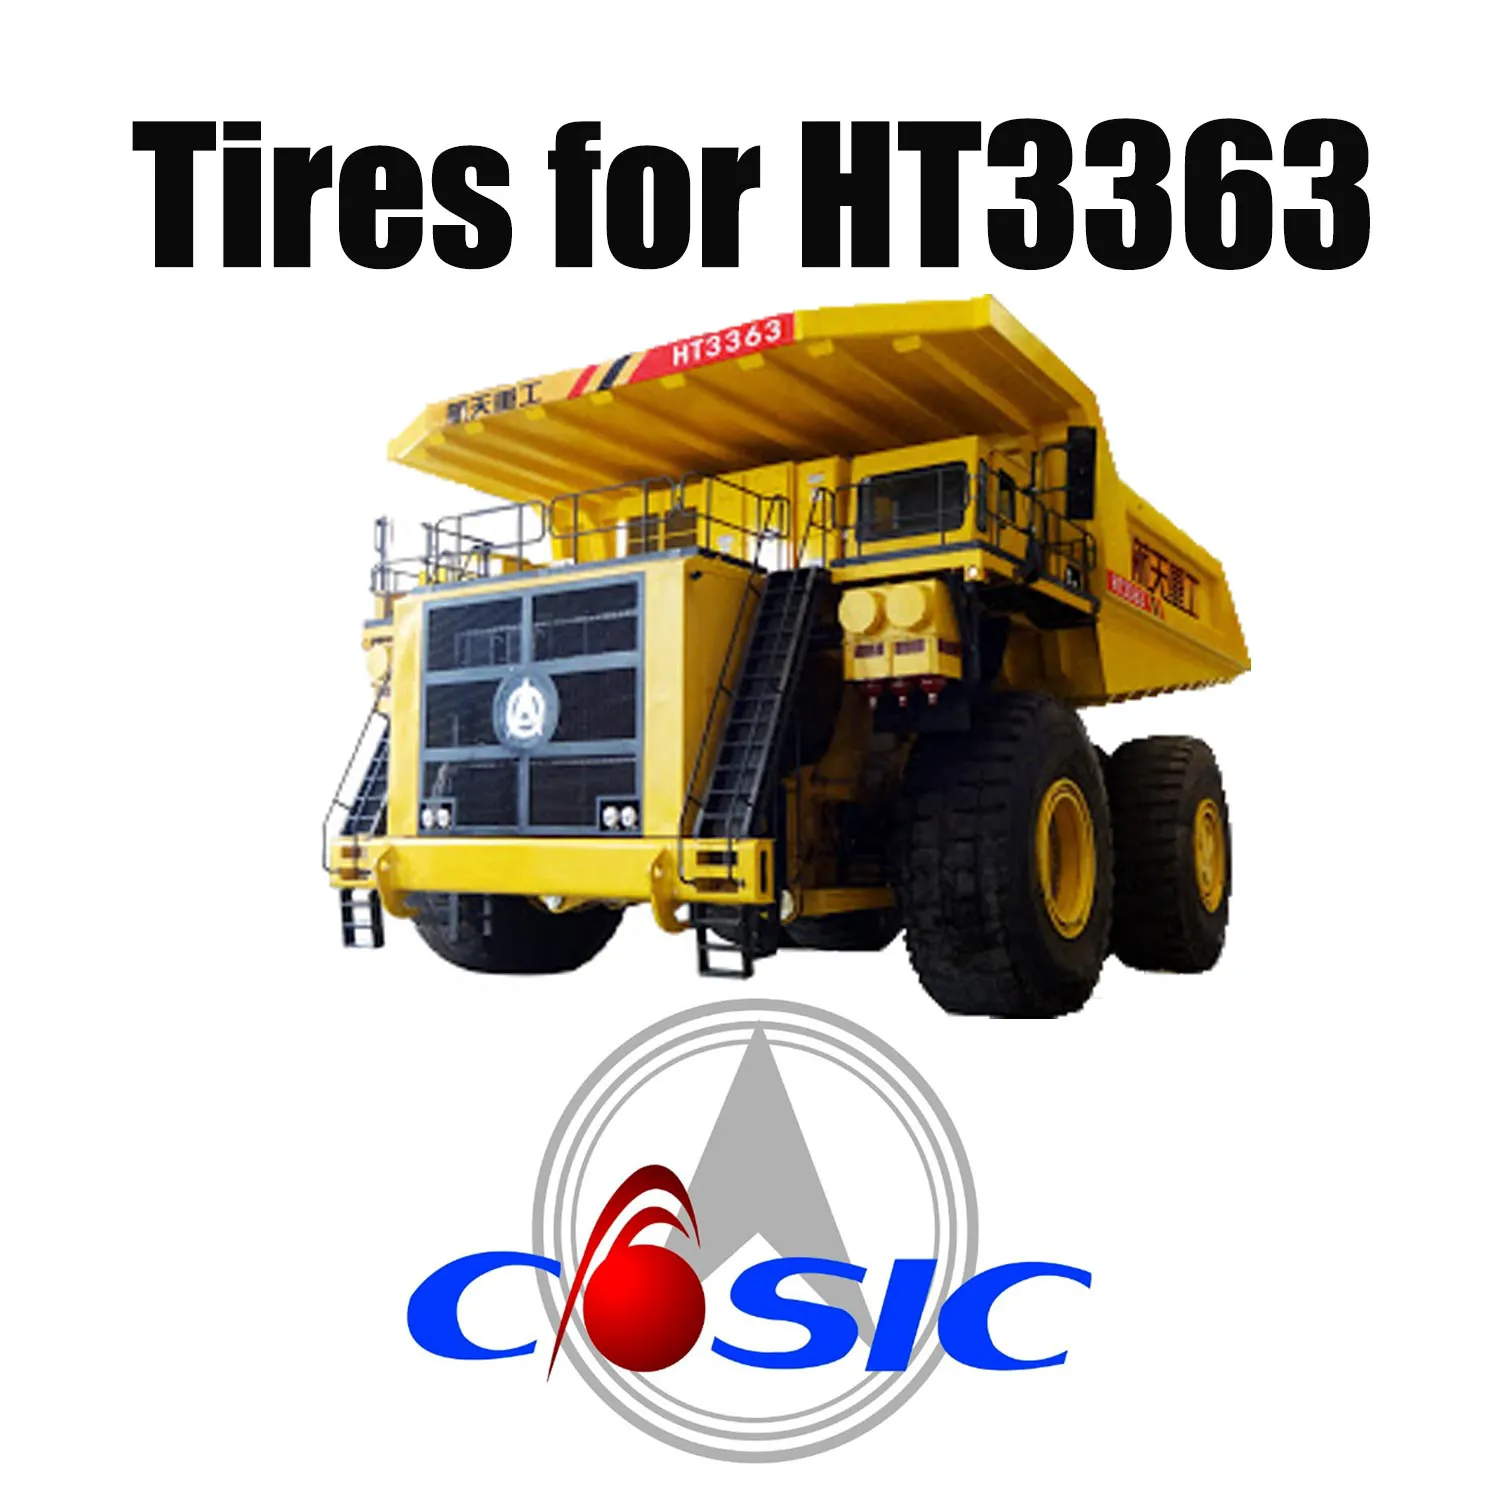 Muldenkipper für den Bergbau HT3363 mit Giant 59/80R63 Earthmover OTR-Reifen